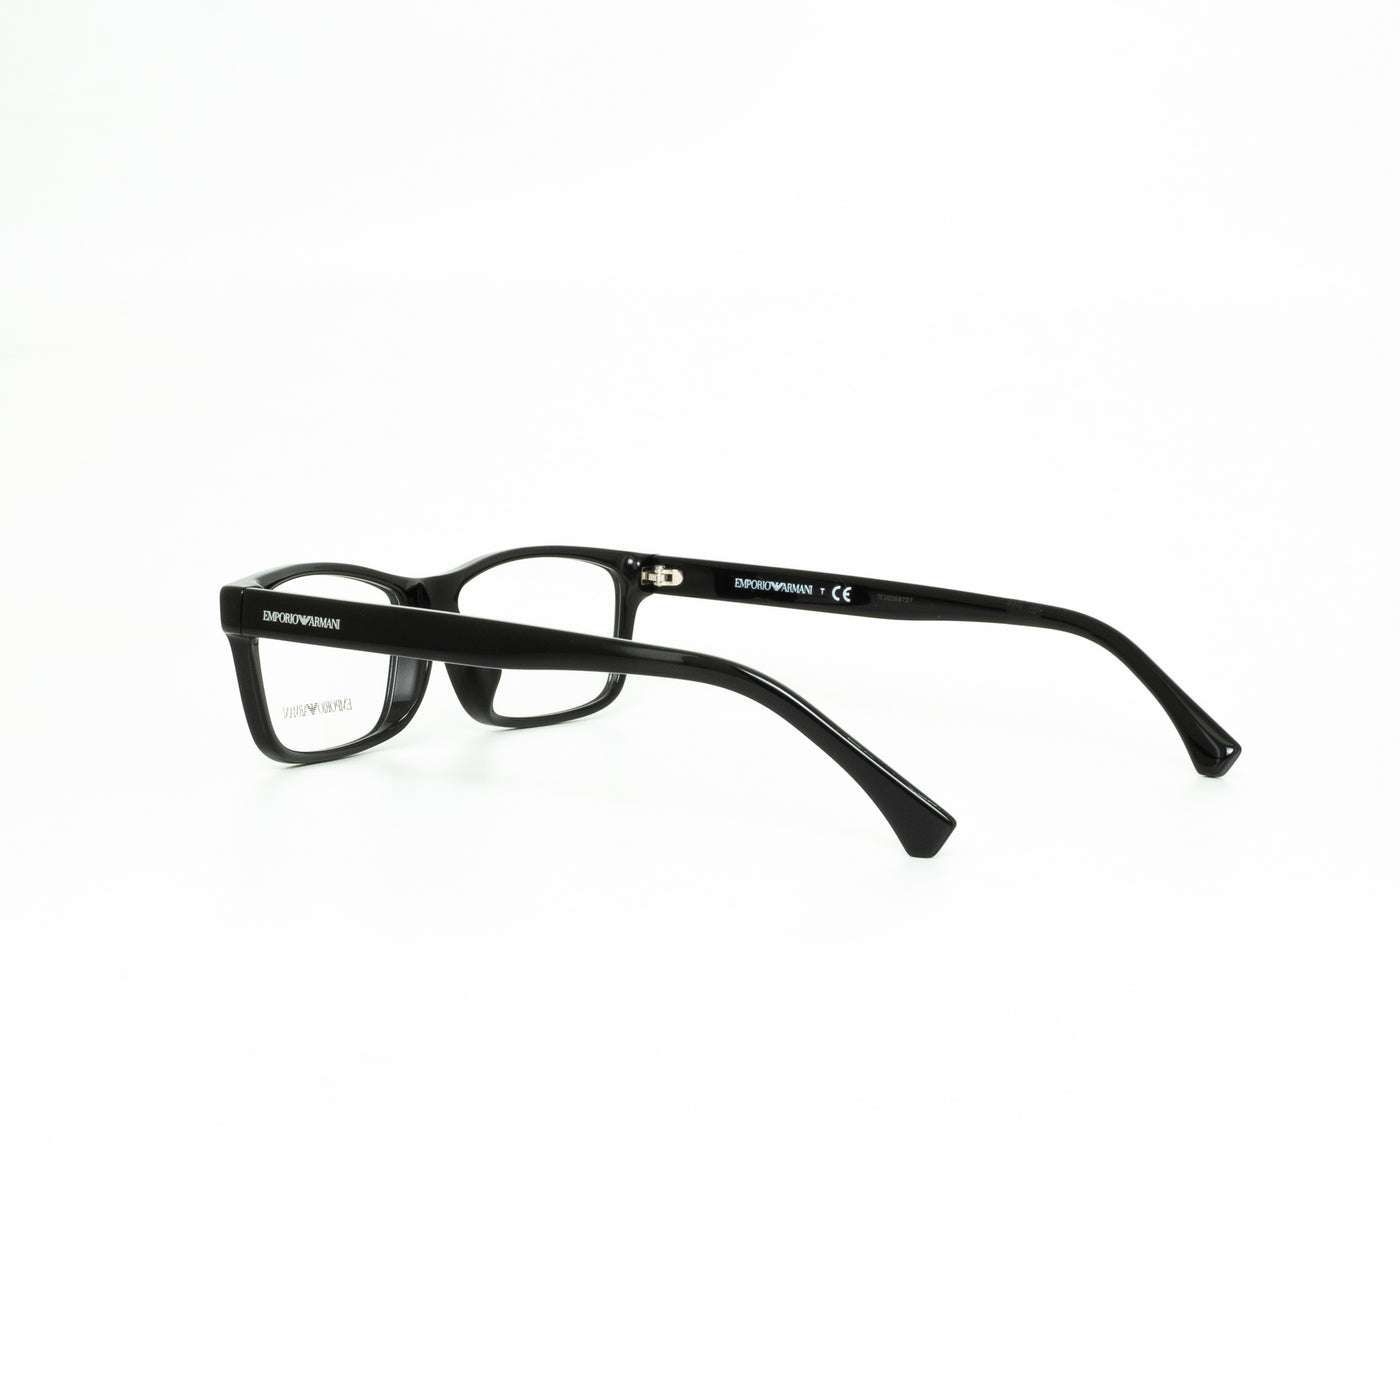 Emporio Armani EA3143F500155 | Eyeglasses - Vision Express Optical Philippines